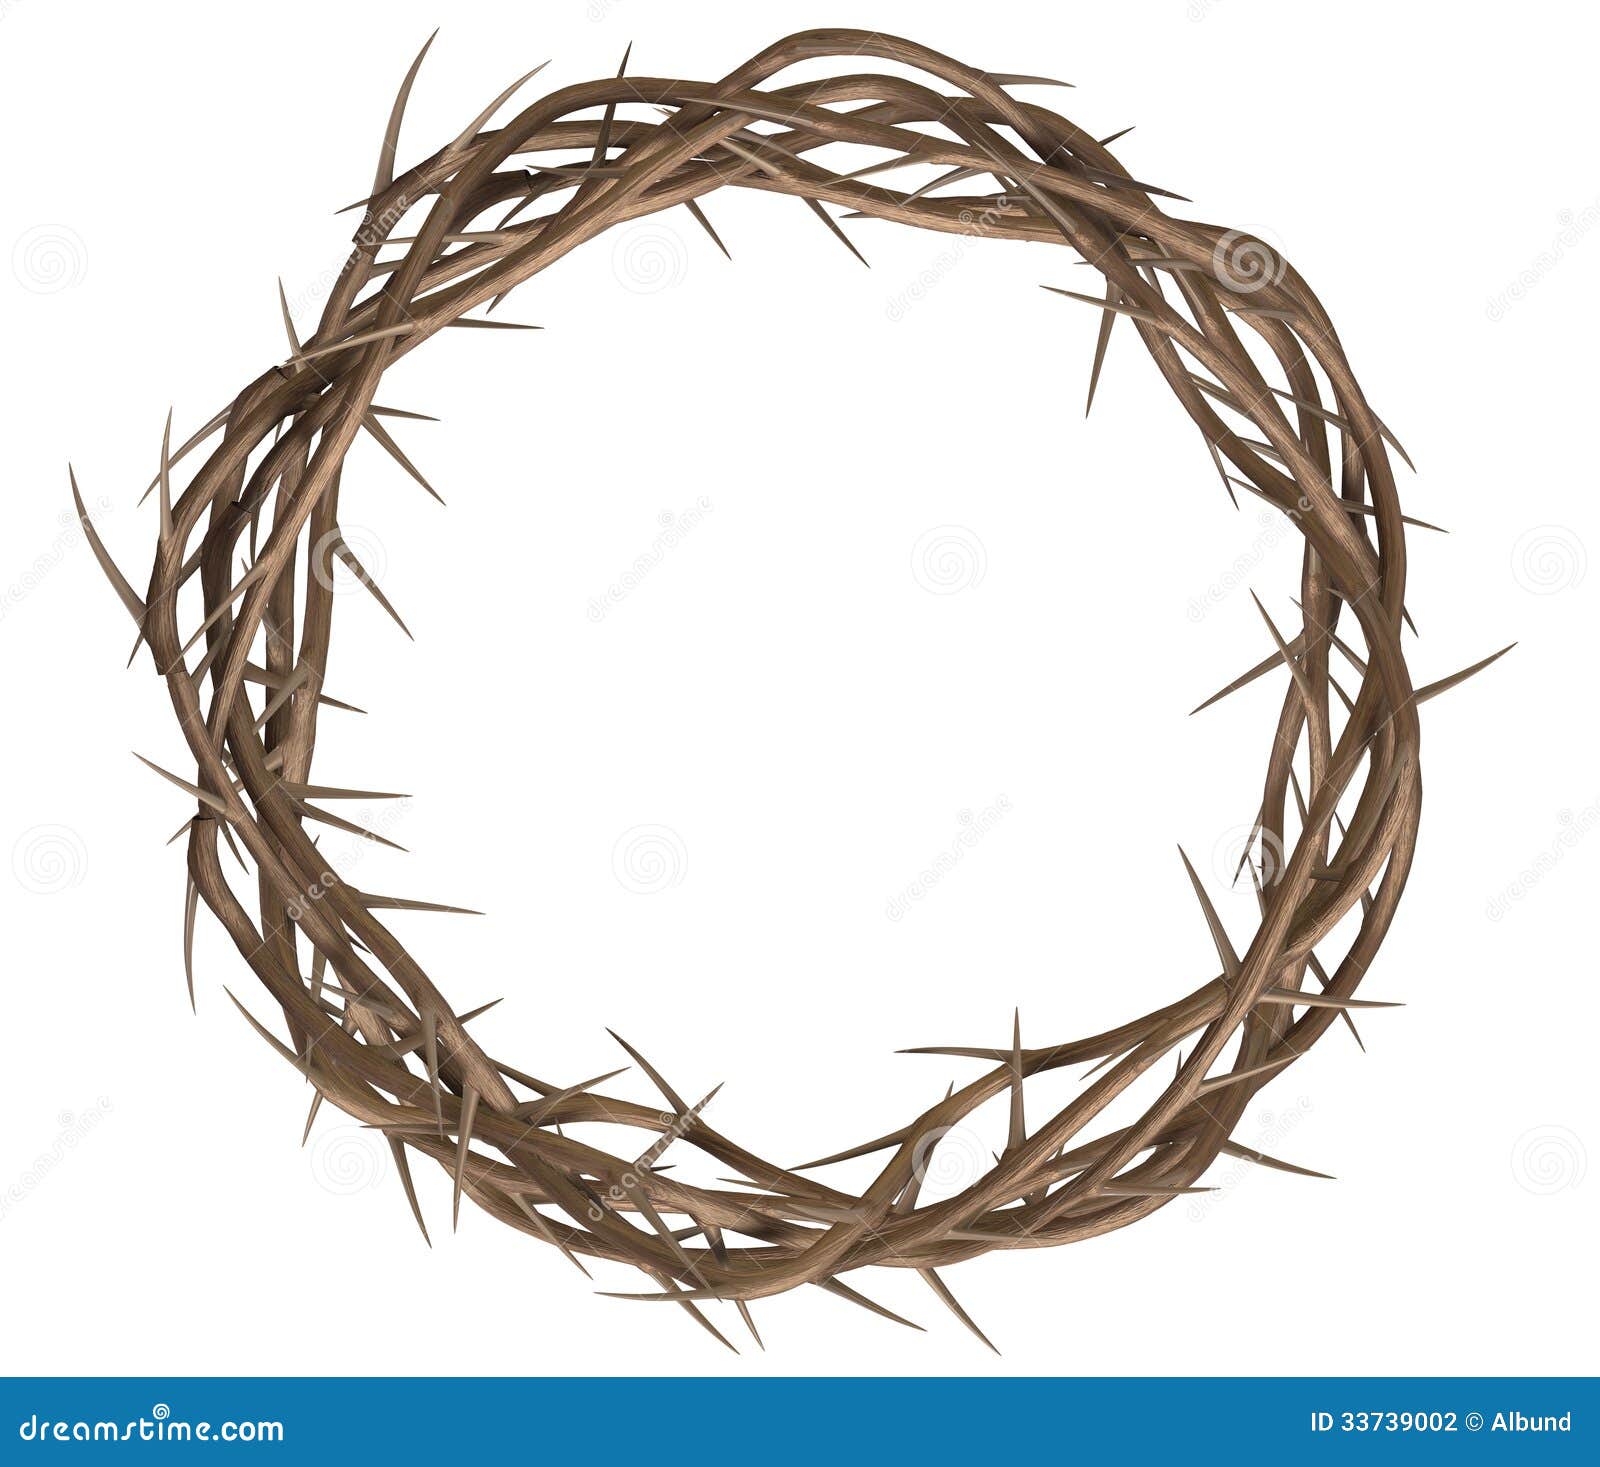 clipart jesus crown thorns - photo #38